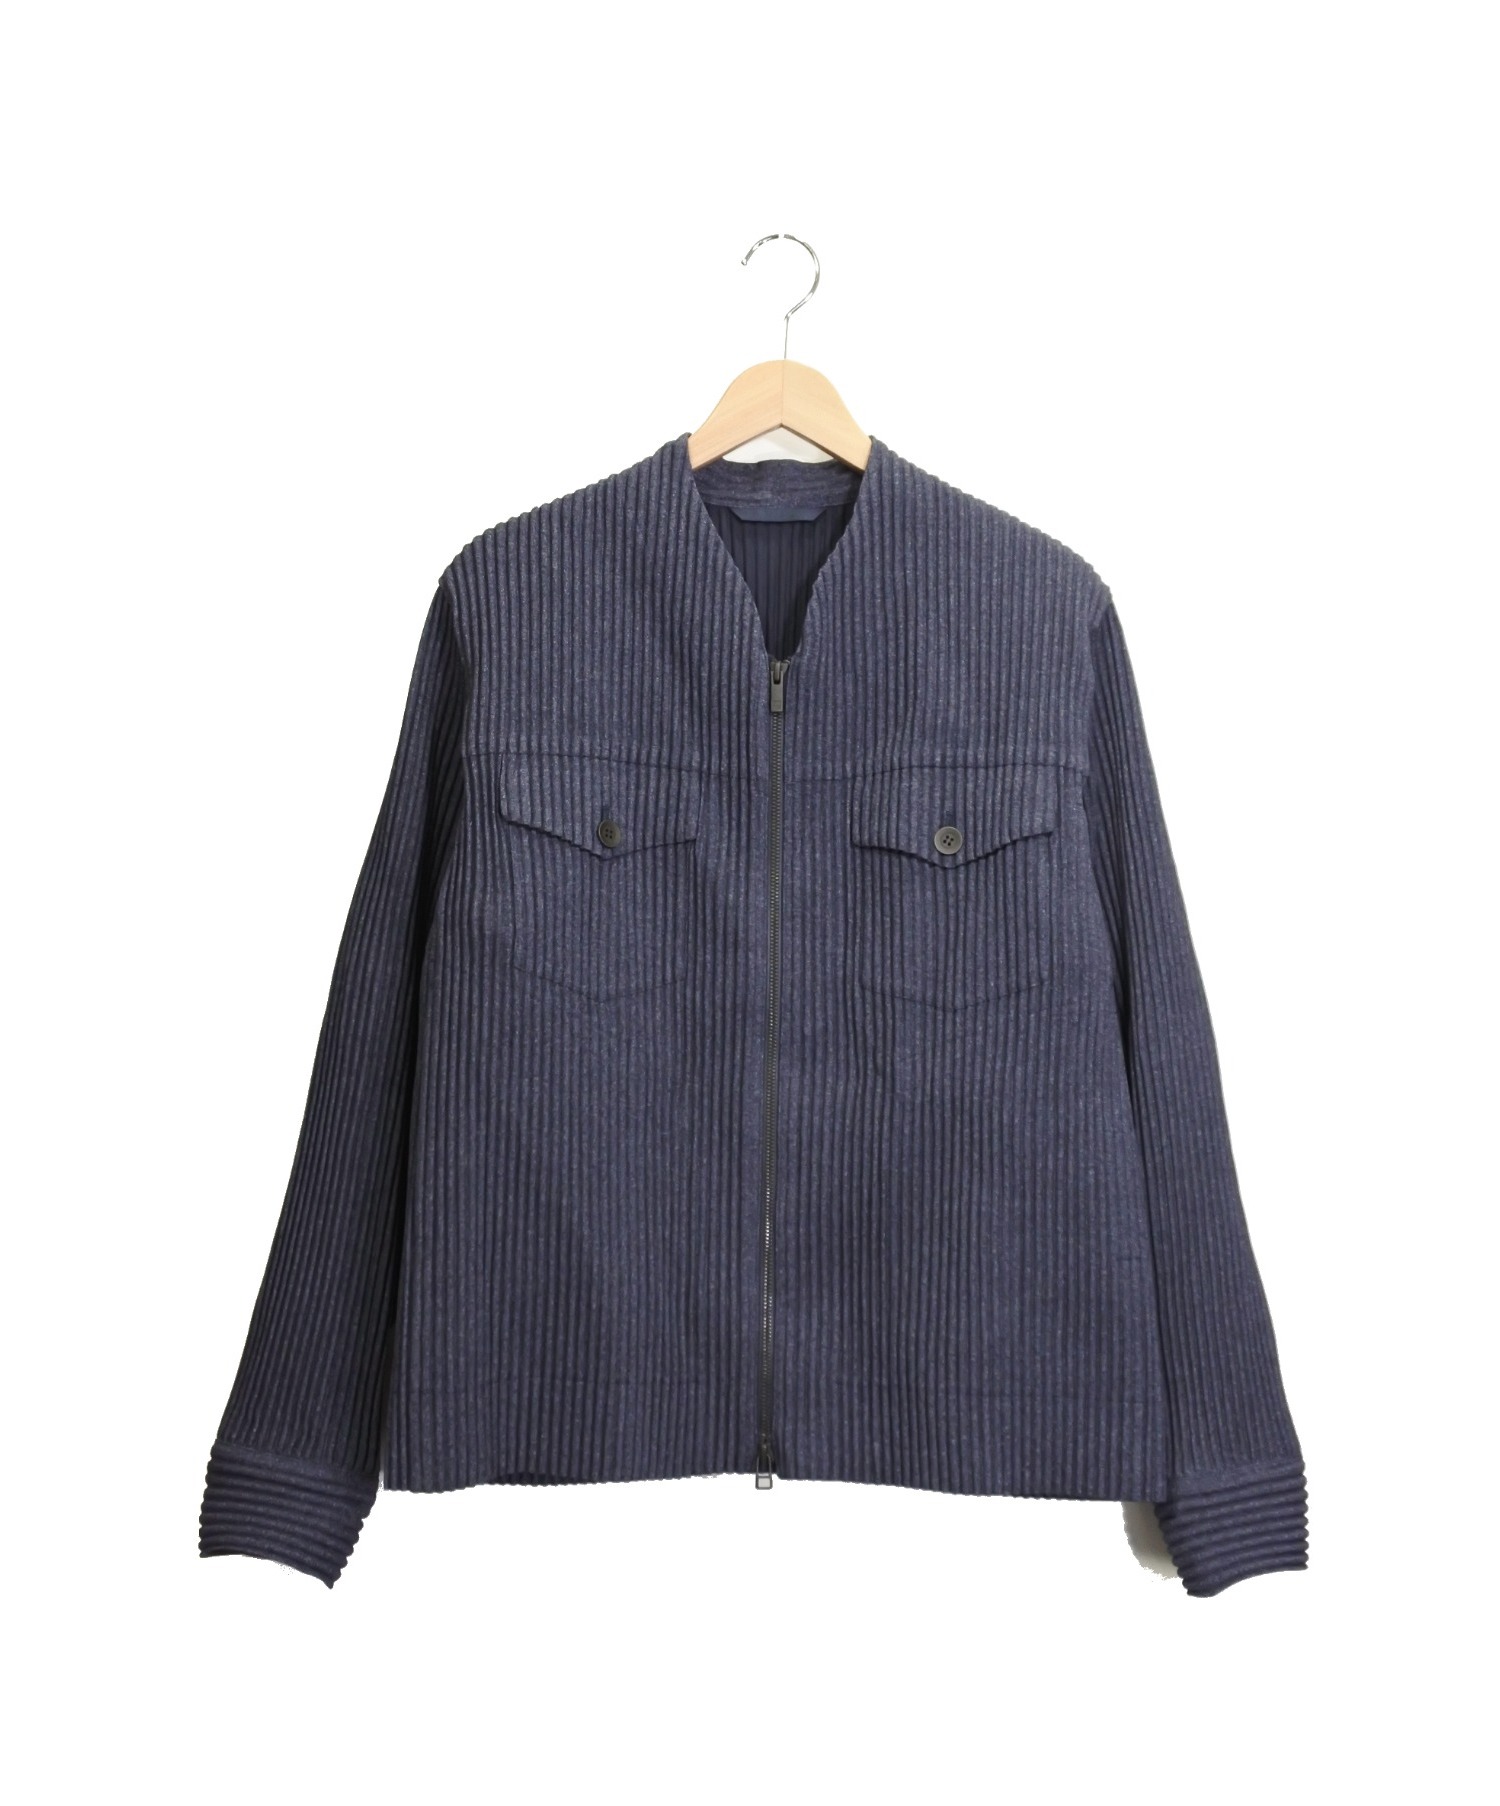 Issey Miyake men マルチカラーシャツジャケット 日本製 kith-